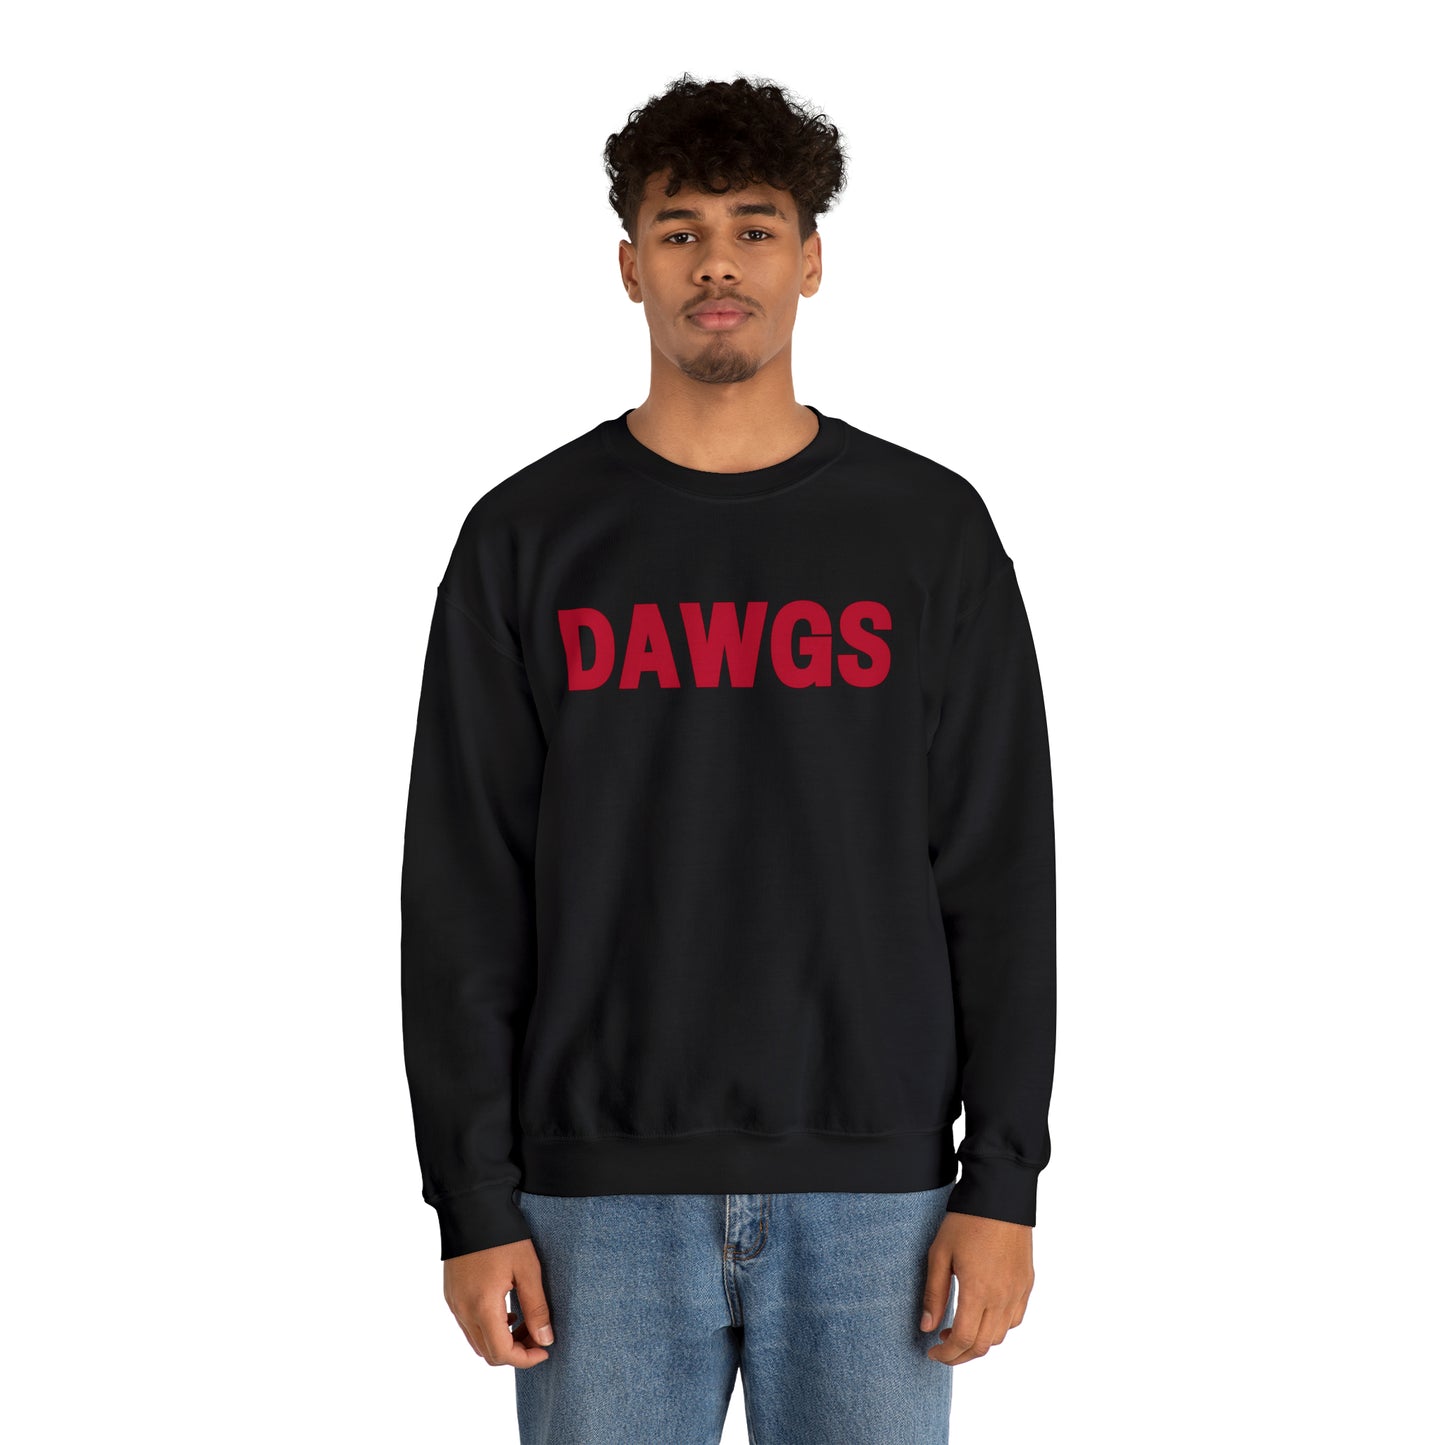 Georgia DAWGS Sweatshirt